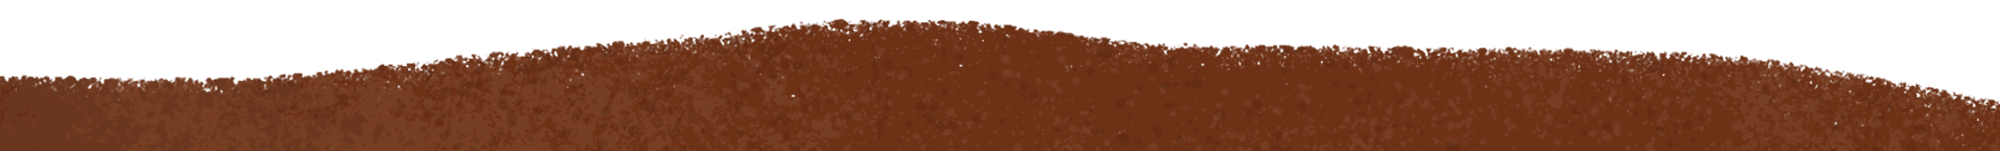 brown edge